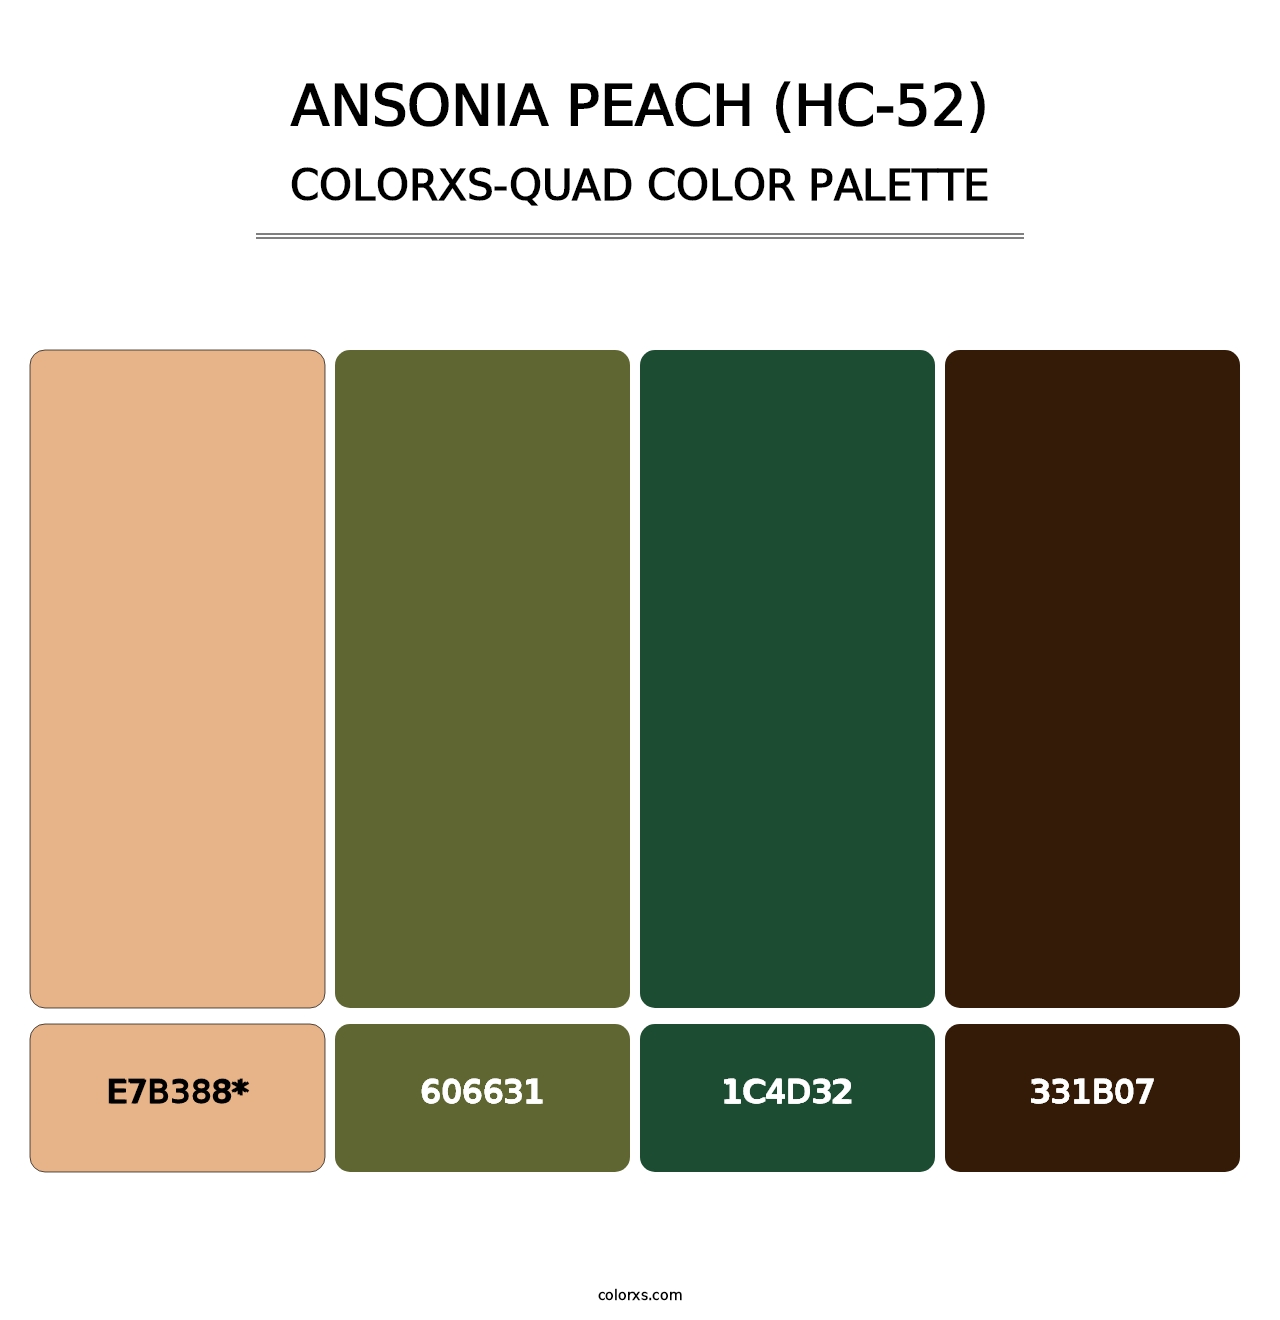 Ansonia Peach (HC-52) - Colorxs Quad Palette